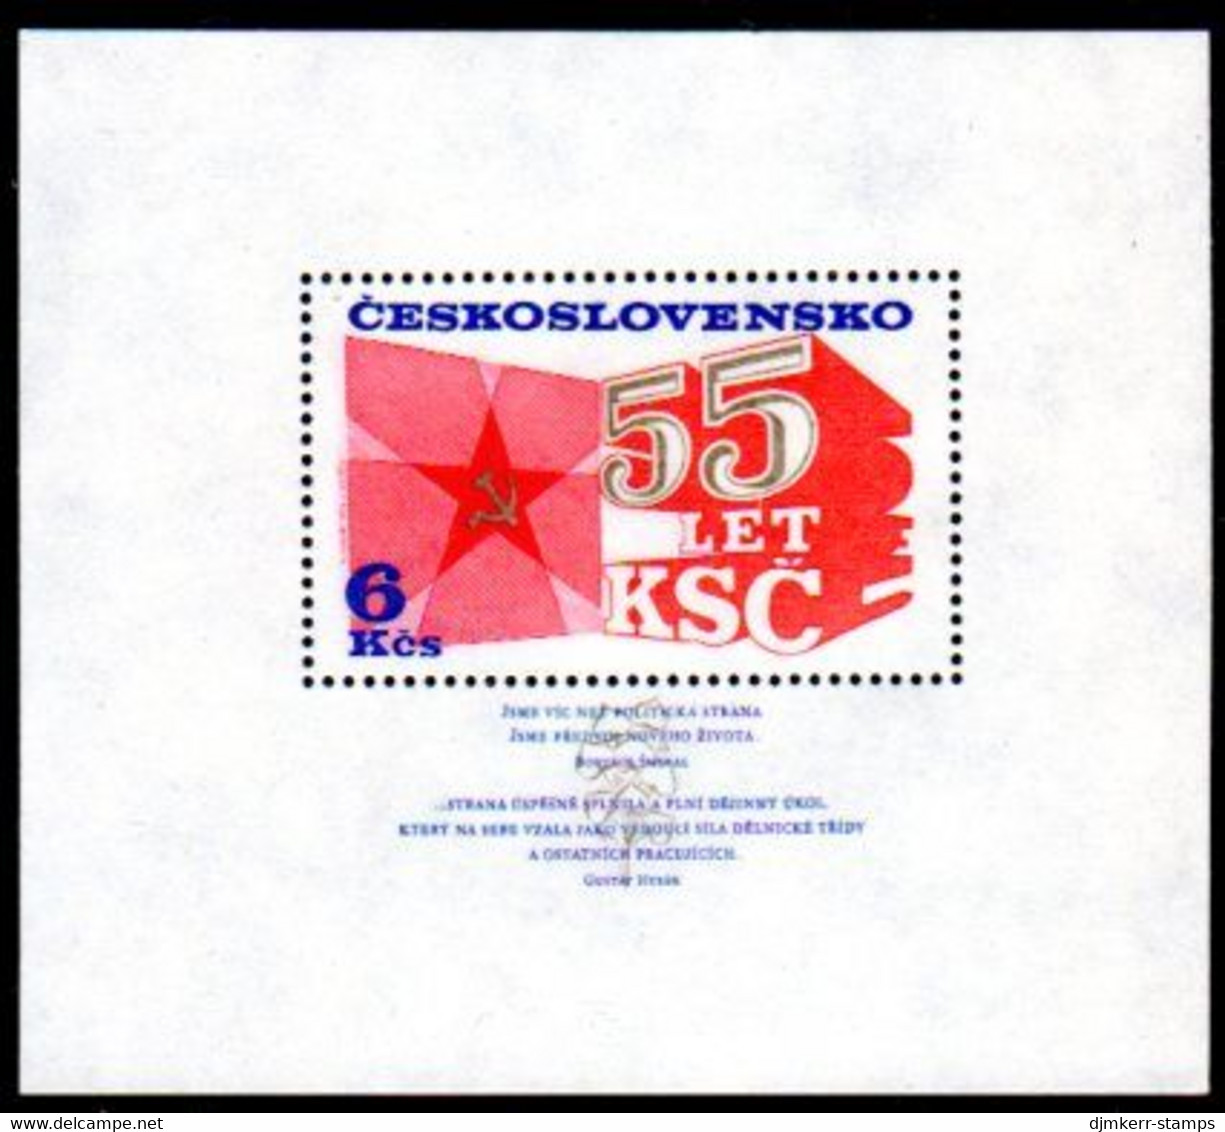 CZECHOSLOVAKIA 1976 Communist Party Anniversary Block  MNH / **. Michel Block 32 - Hojas Bloque